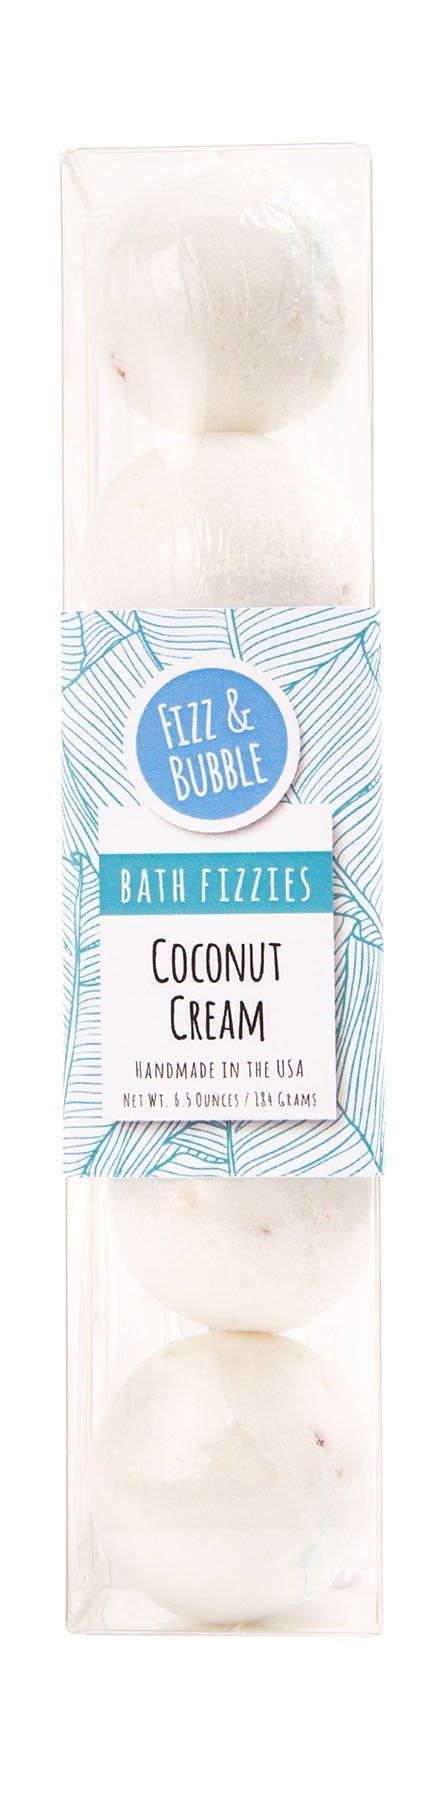 Bath Fizzy Petite Bath Bomb 5 Pack Coconut Cream